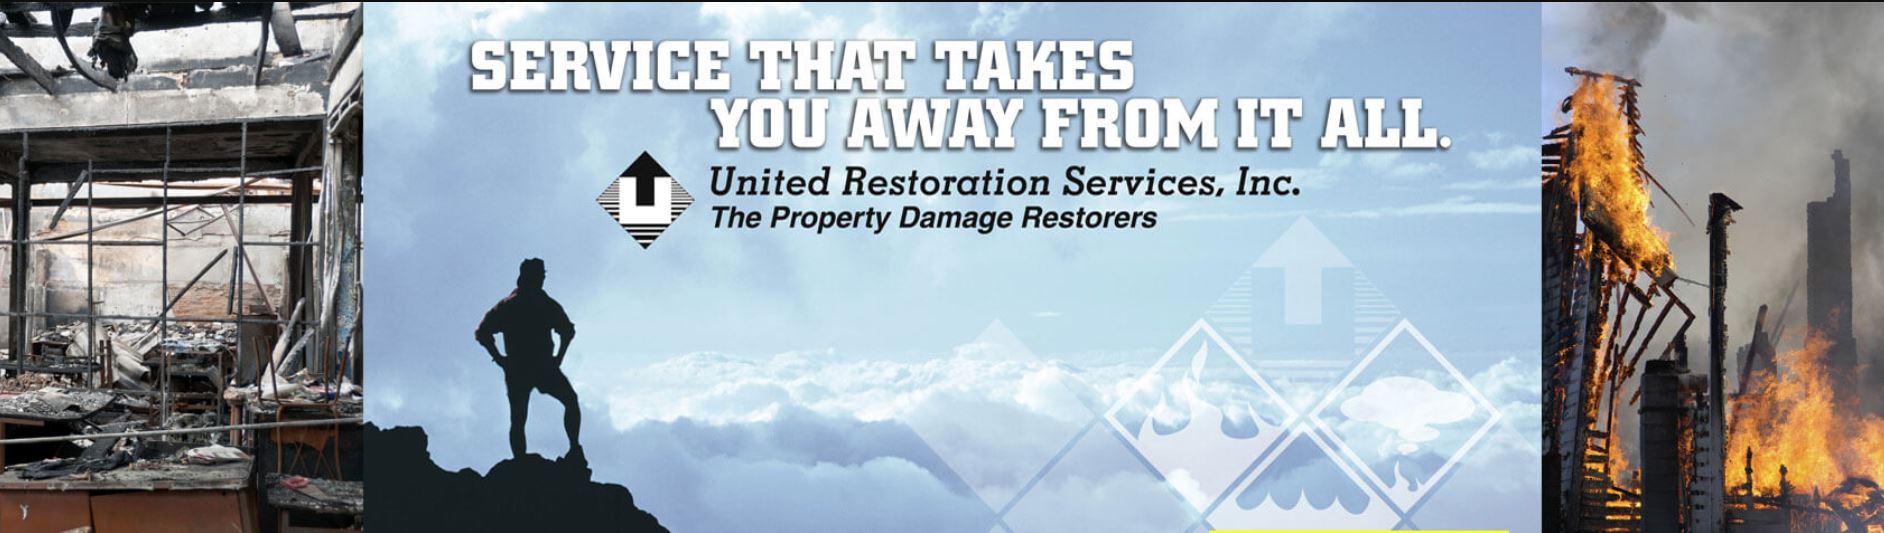 United Restoration Services, Inc